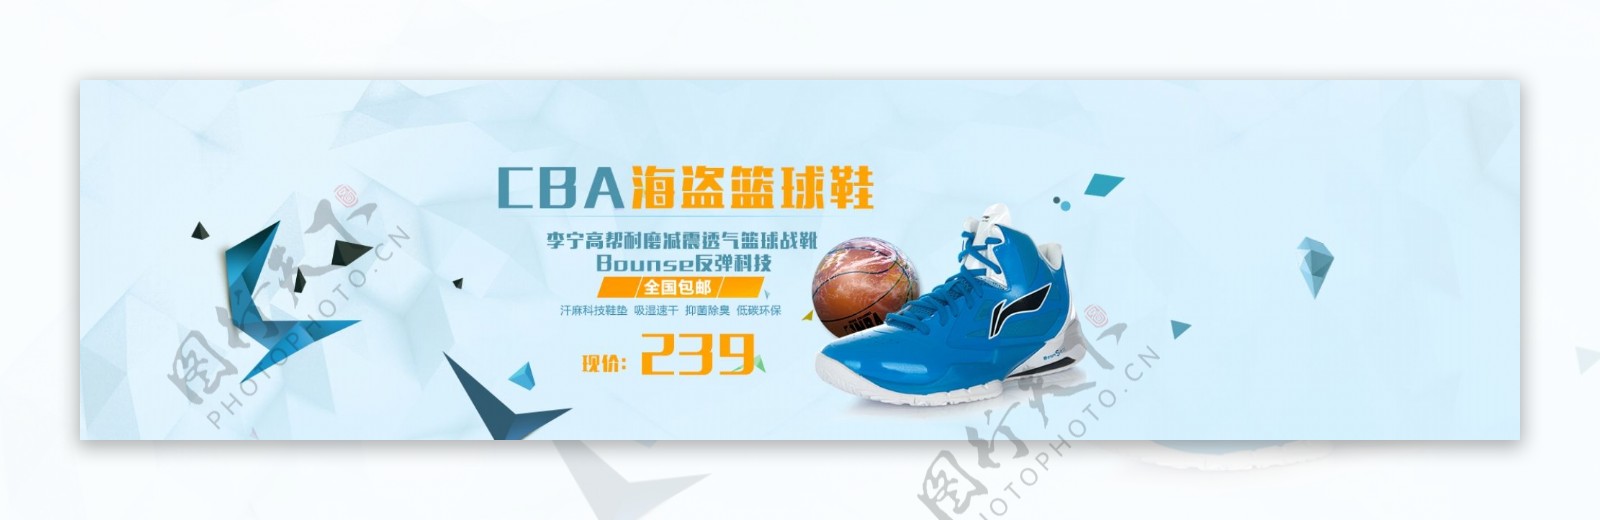 CBA篮球鞋首页海报